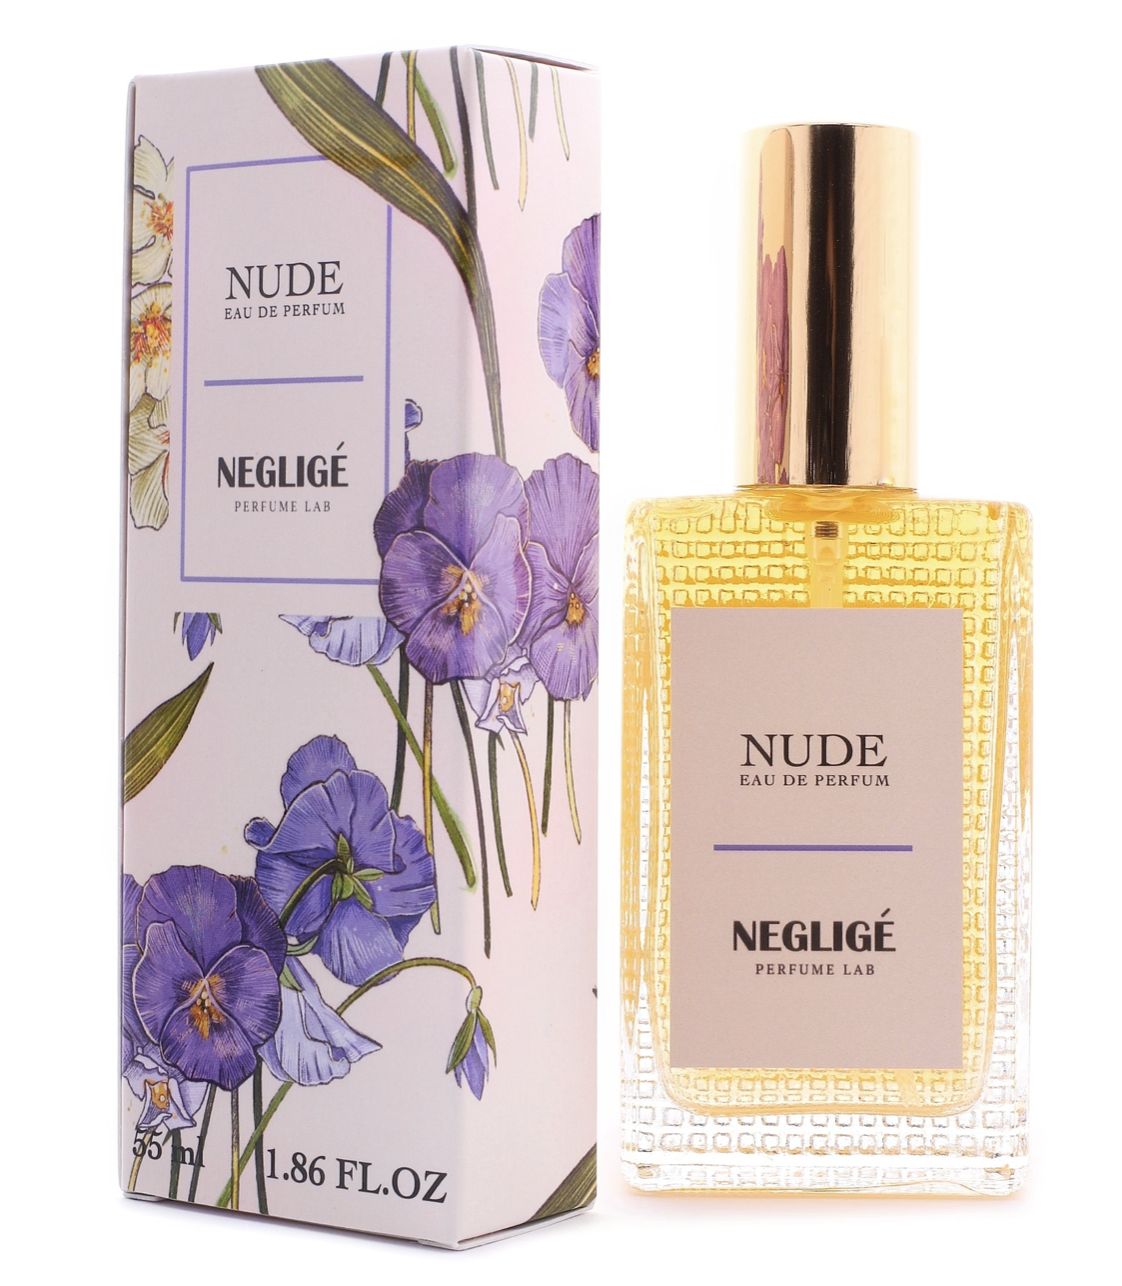 Nude Negligé Perfume Lab perfume a novo fragrância Feminino